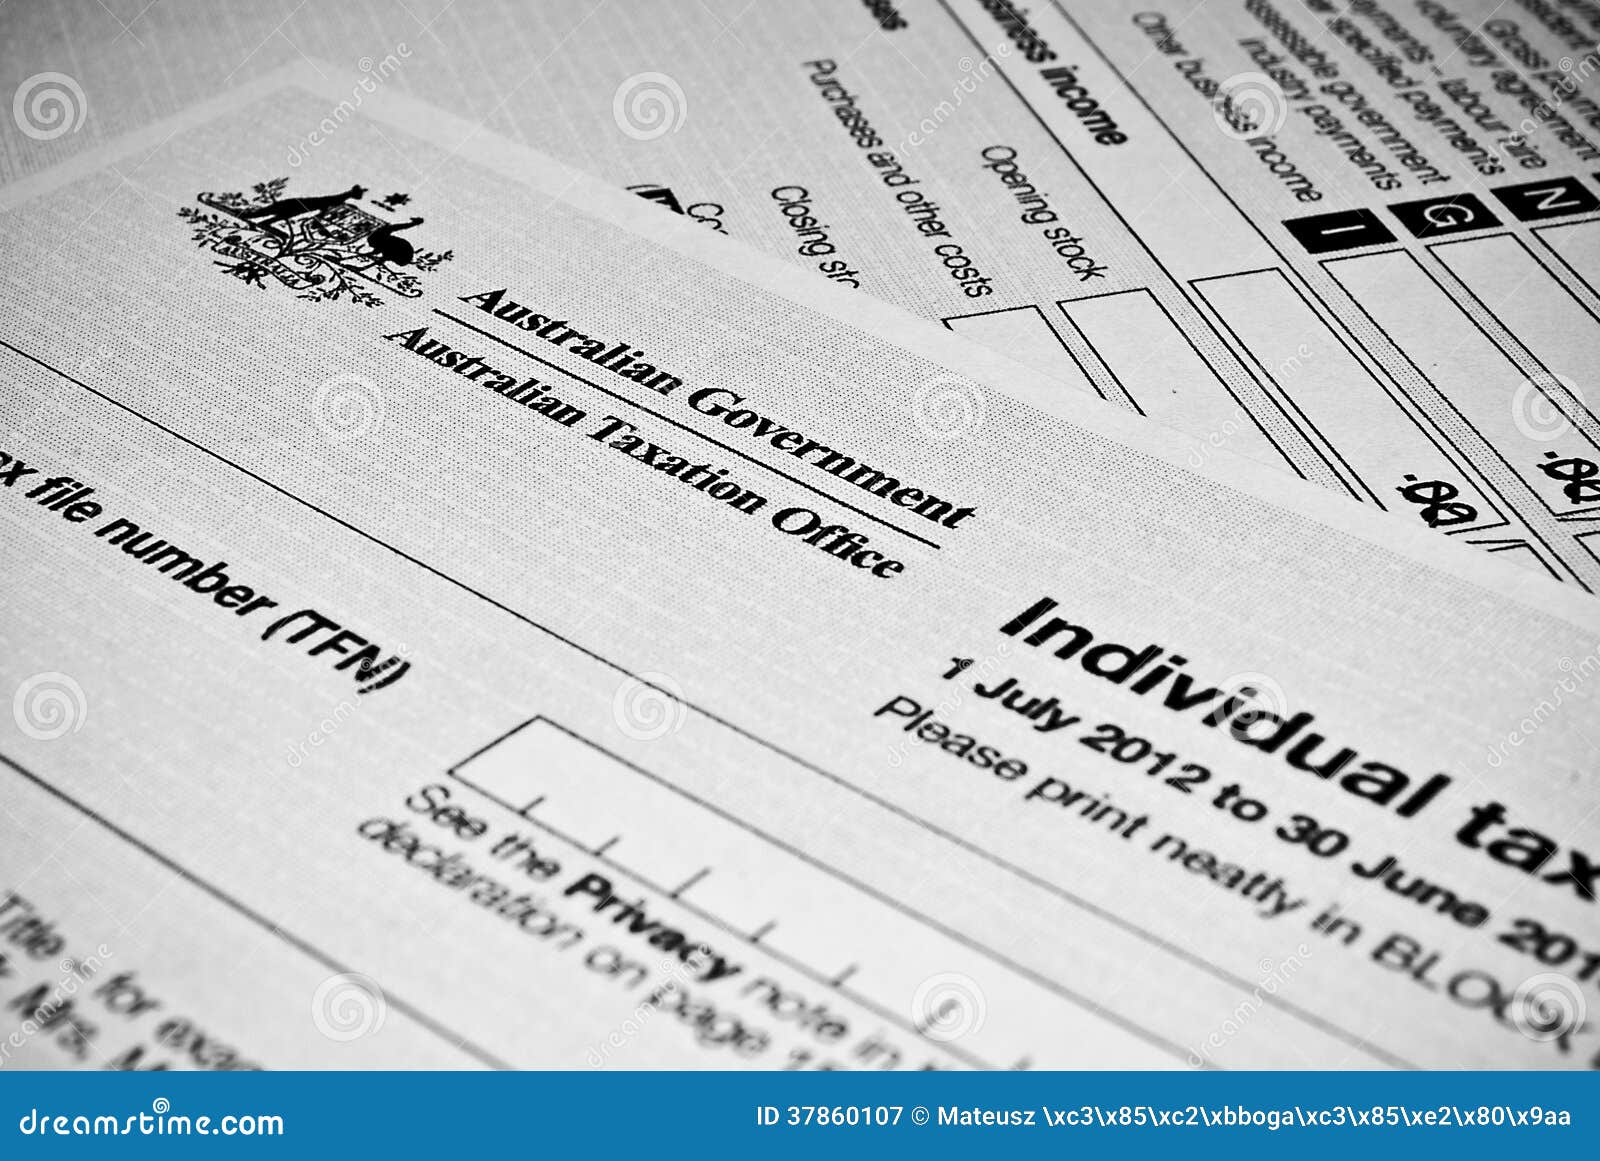 australian-individual-tax-return-form-stock-image-image-of-paper